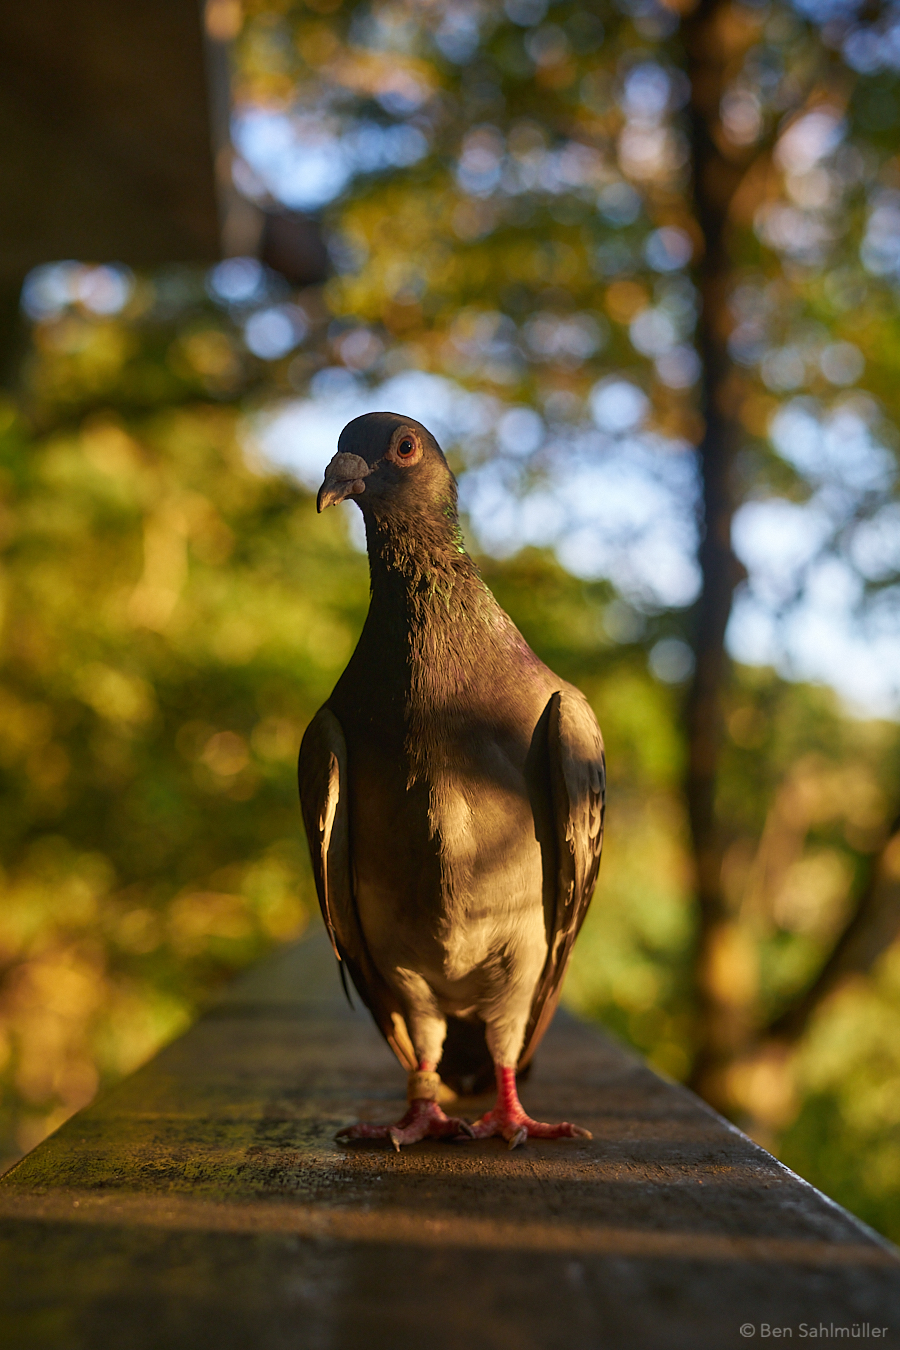 A messenger pigeon posing for a portrait.